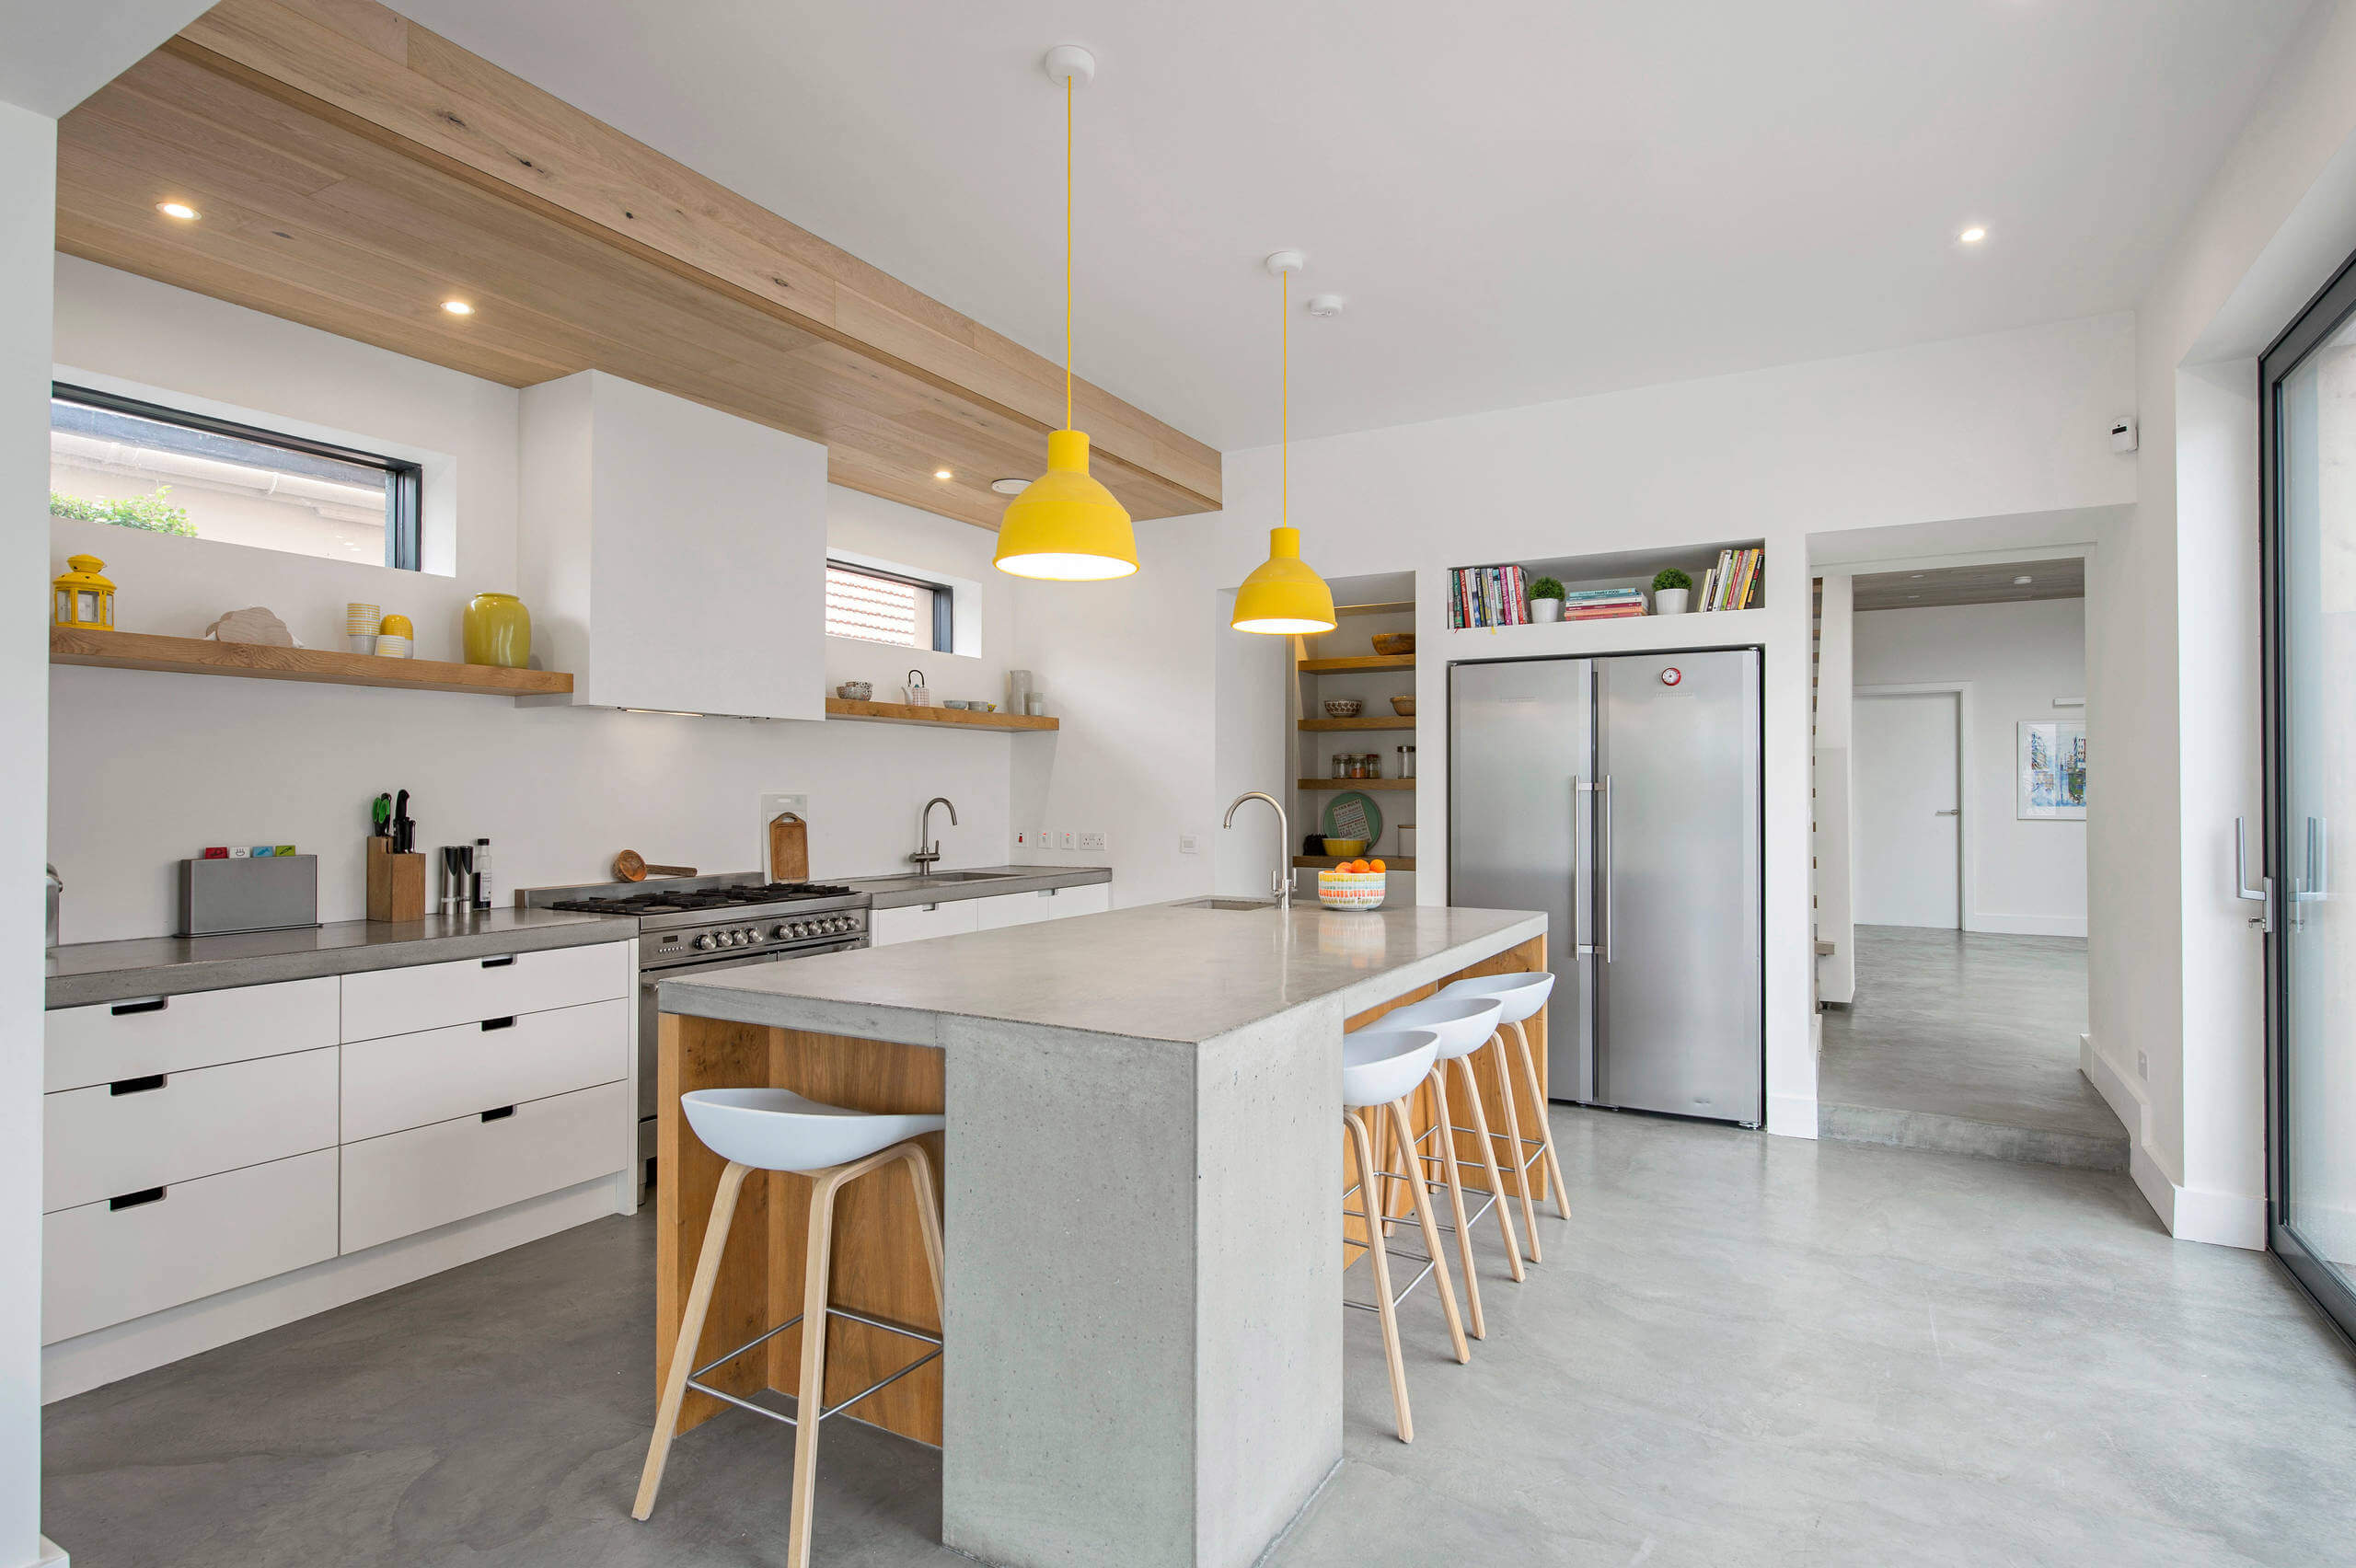 12 concrete kitchen countertop